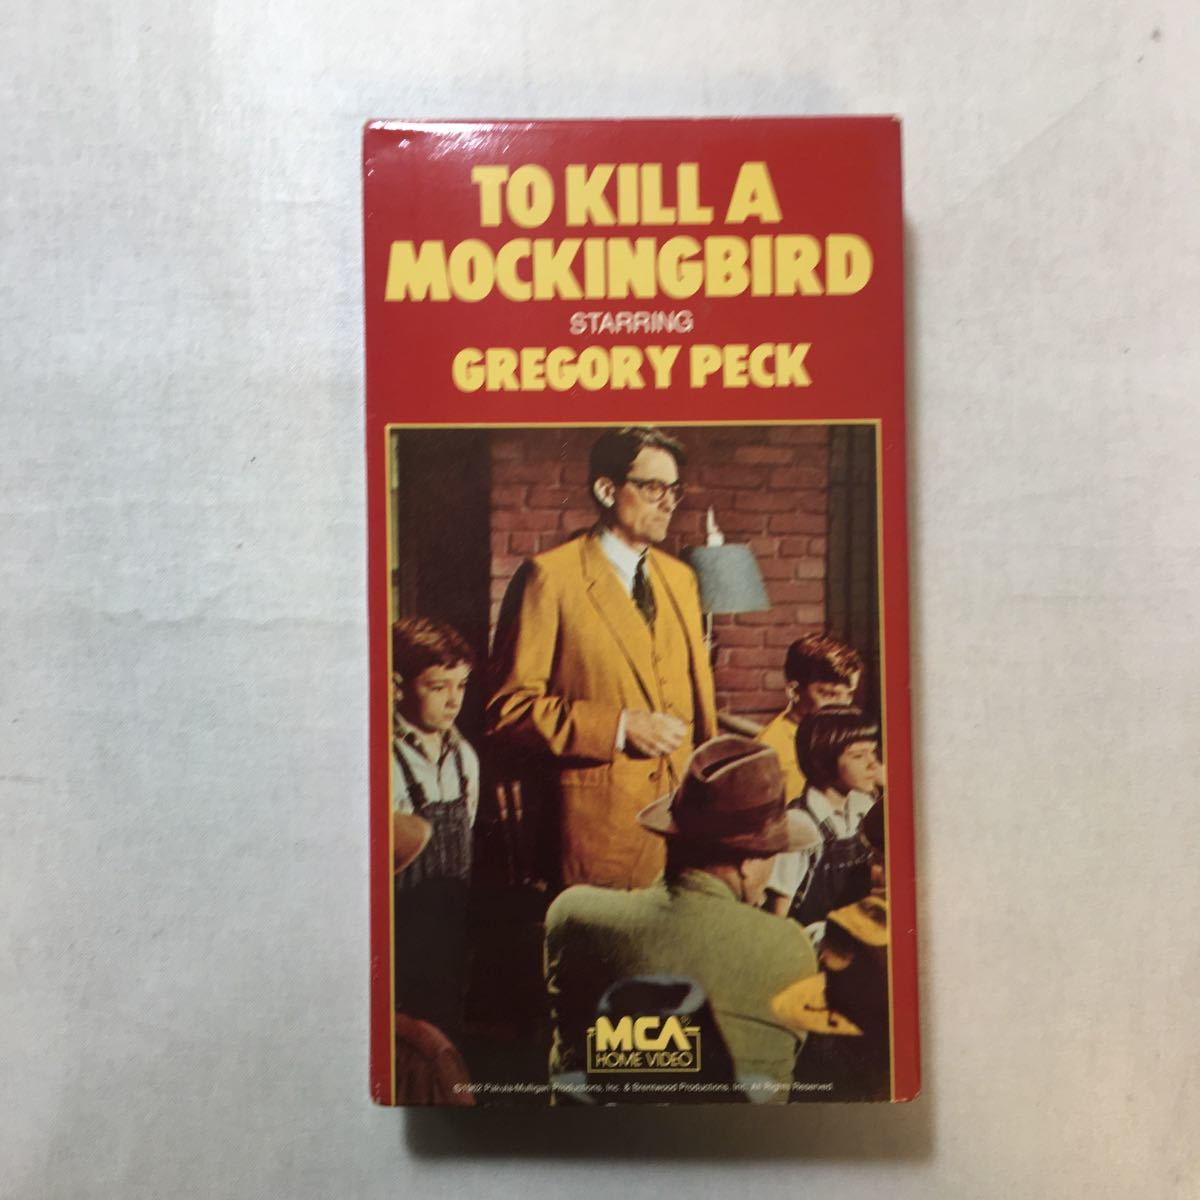 zaa-zvd09♪To Kill a Mockingbird Gregory Peck (出演) (輸入版) [VHS]ビデオ 1998/2/24 129分_画像1